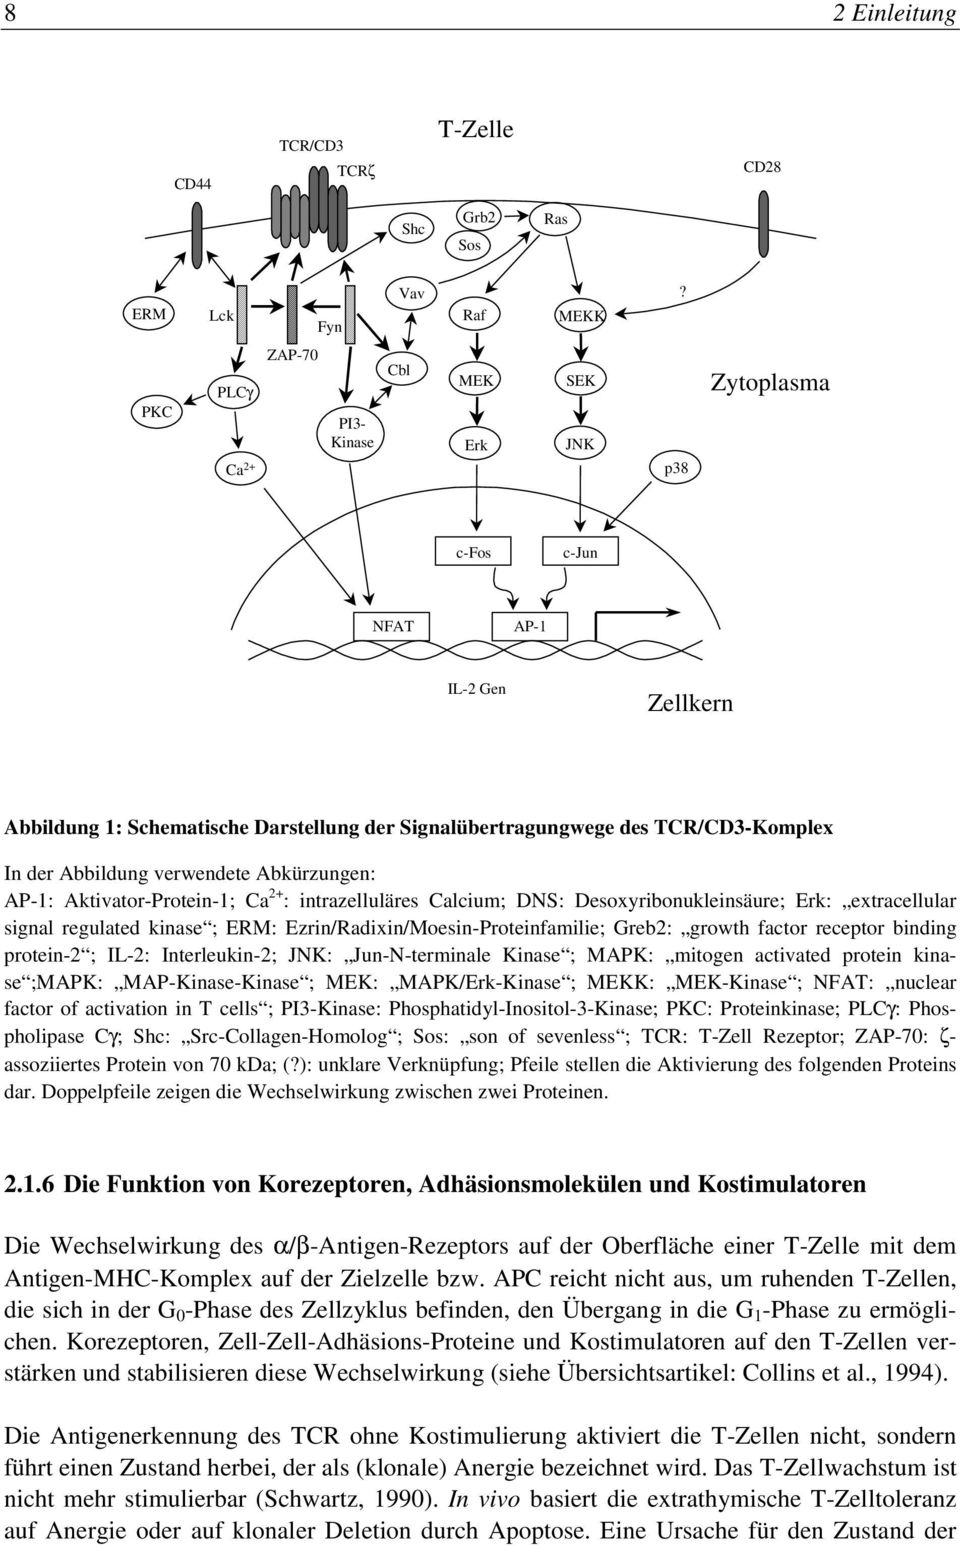 Abbildung verwendete Abkürzungen: AP-1: Aktivator-Protein-1; Ca 2+ : intrazelluläres Calcium; DNS: Desoxyribonukleinsäure; Erk: extracellular signal regulated kinase ; ERM: